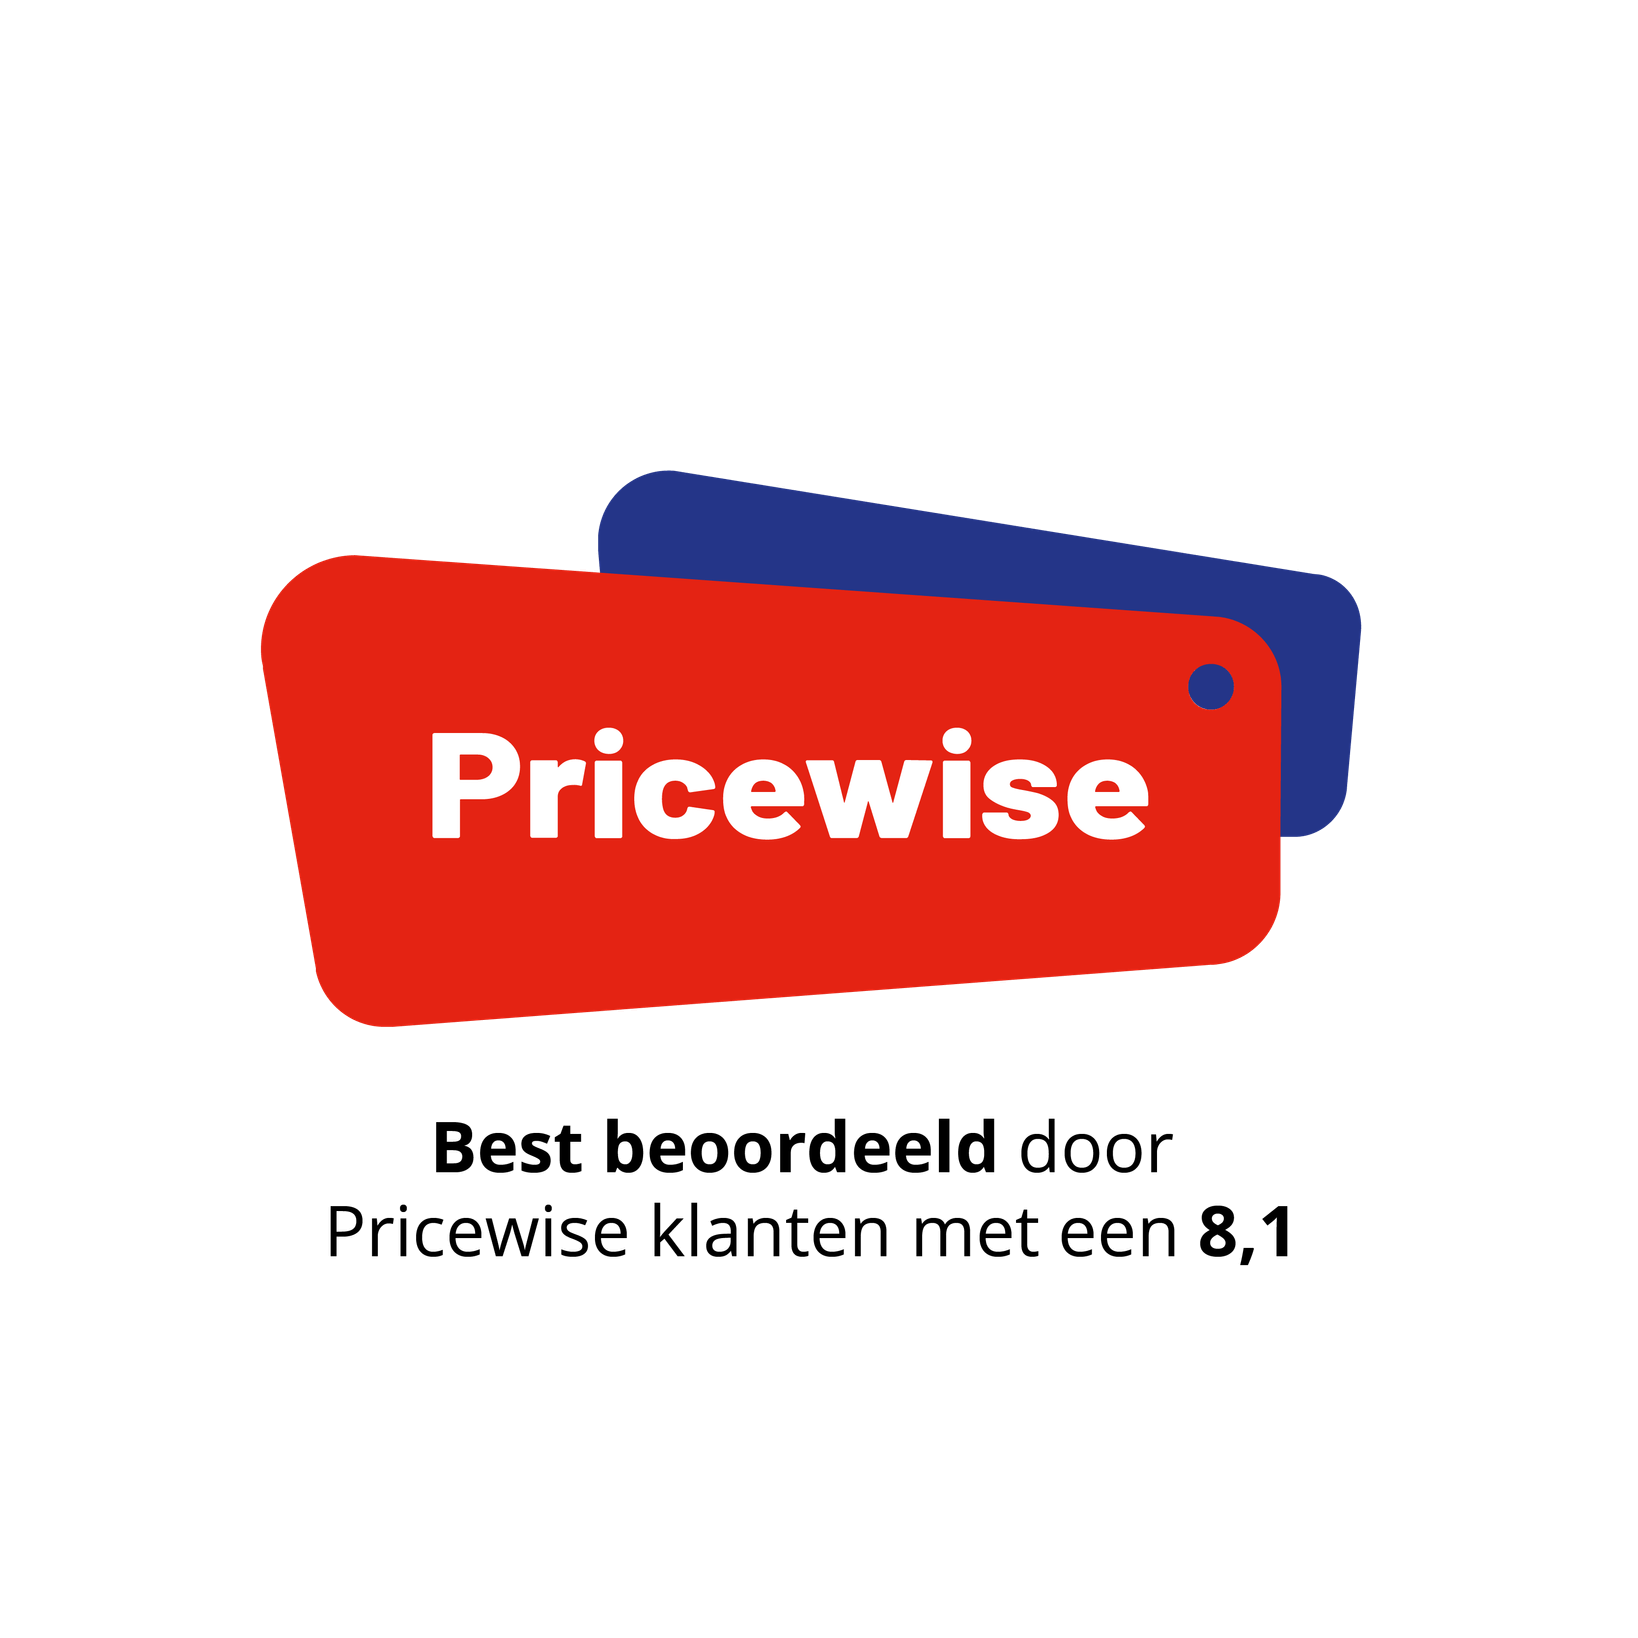 PriceWise Provider Award 2021